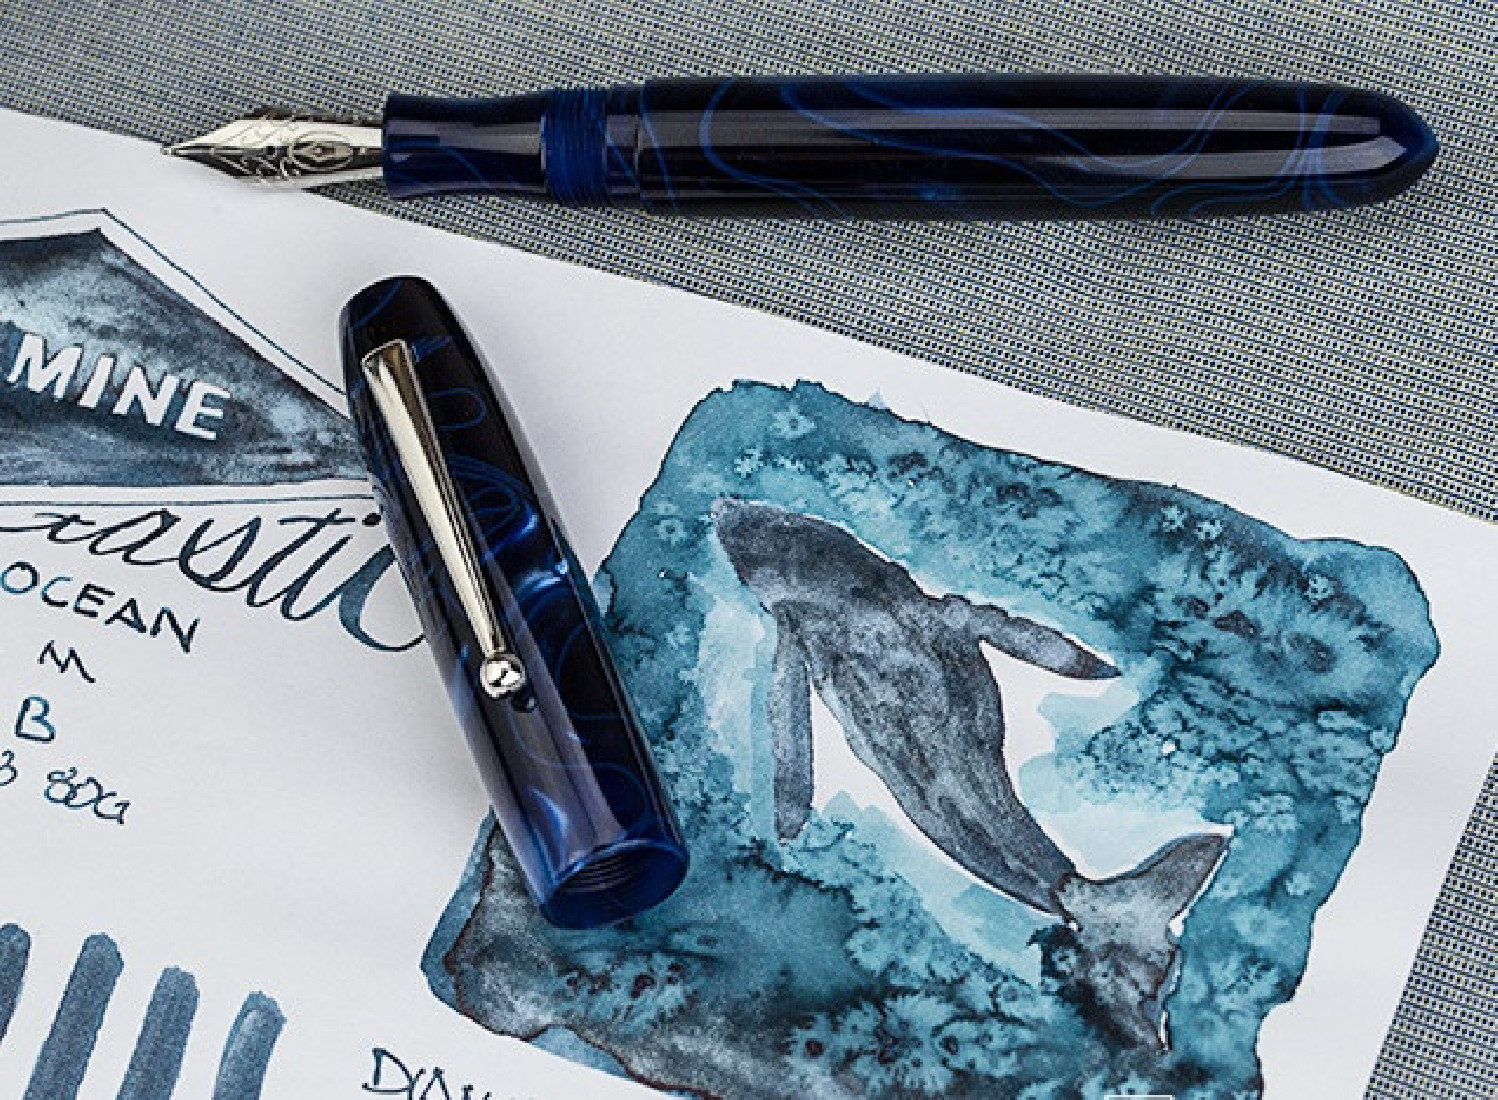 Diamine 50ml Enchanted Ocean Fountain pen shimmer ink